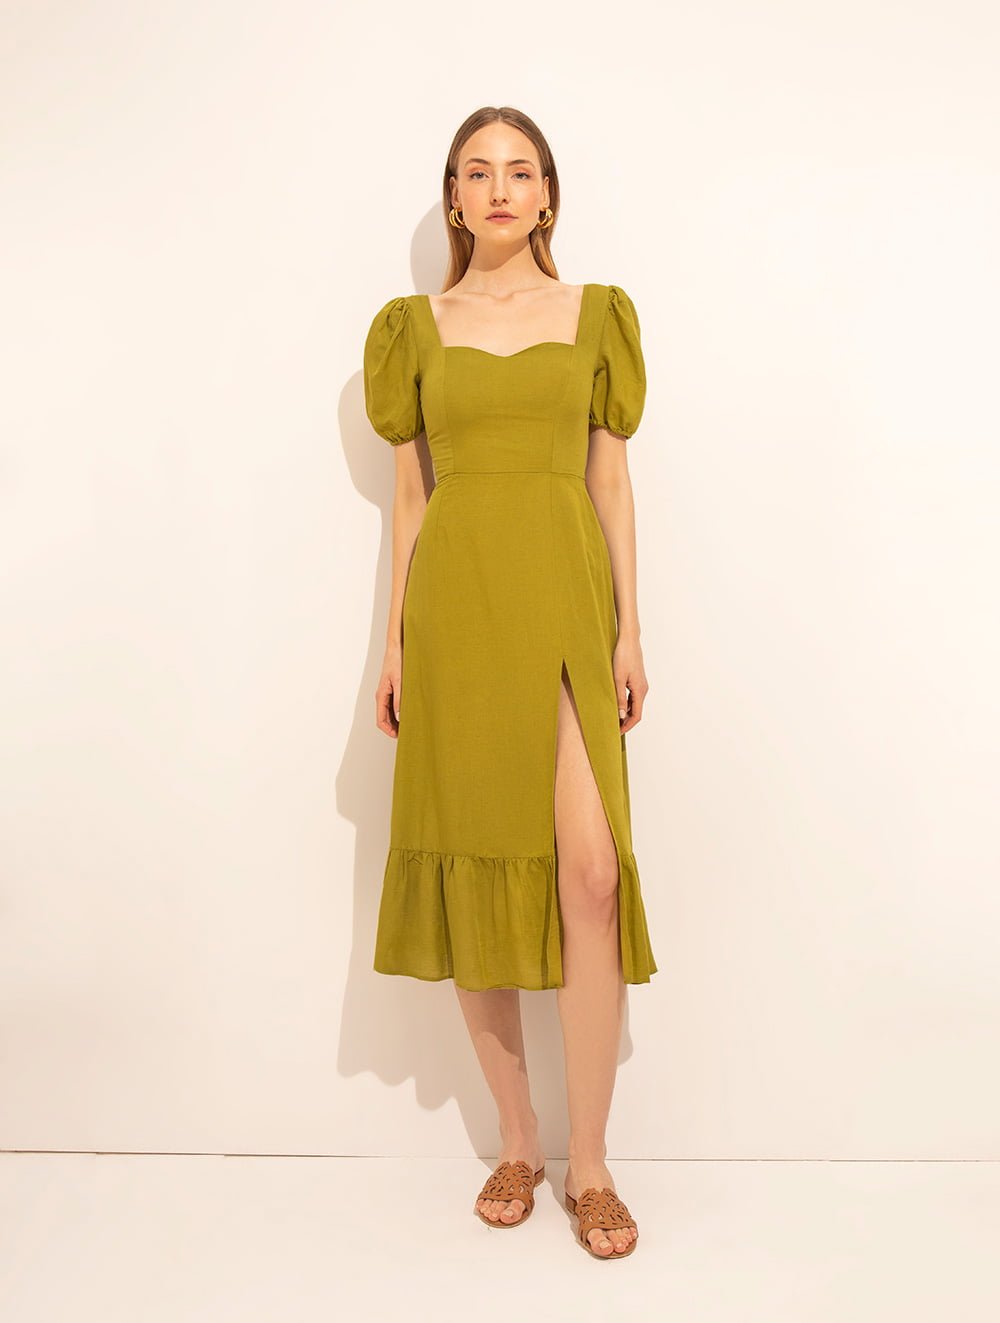 Olive dress SS 2022 2